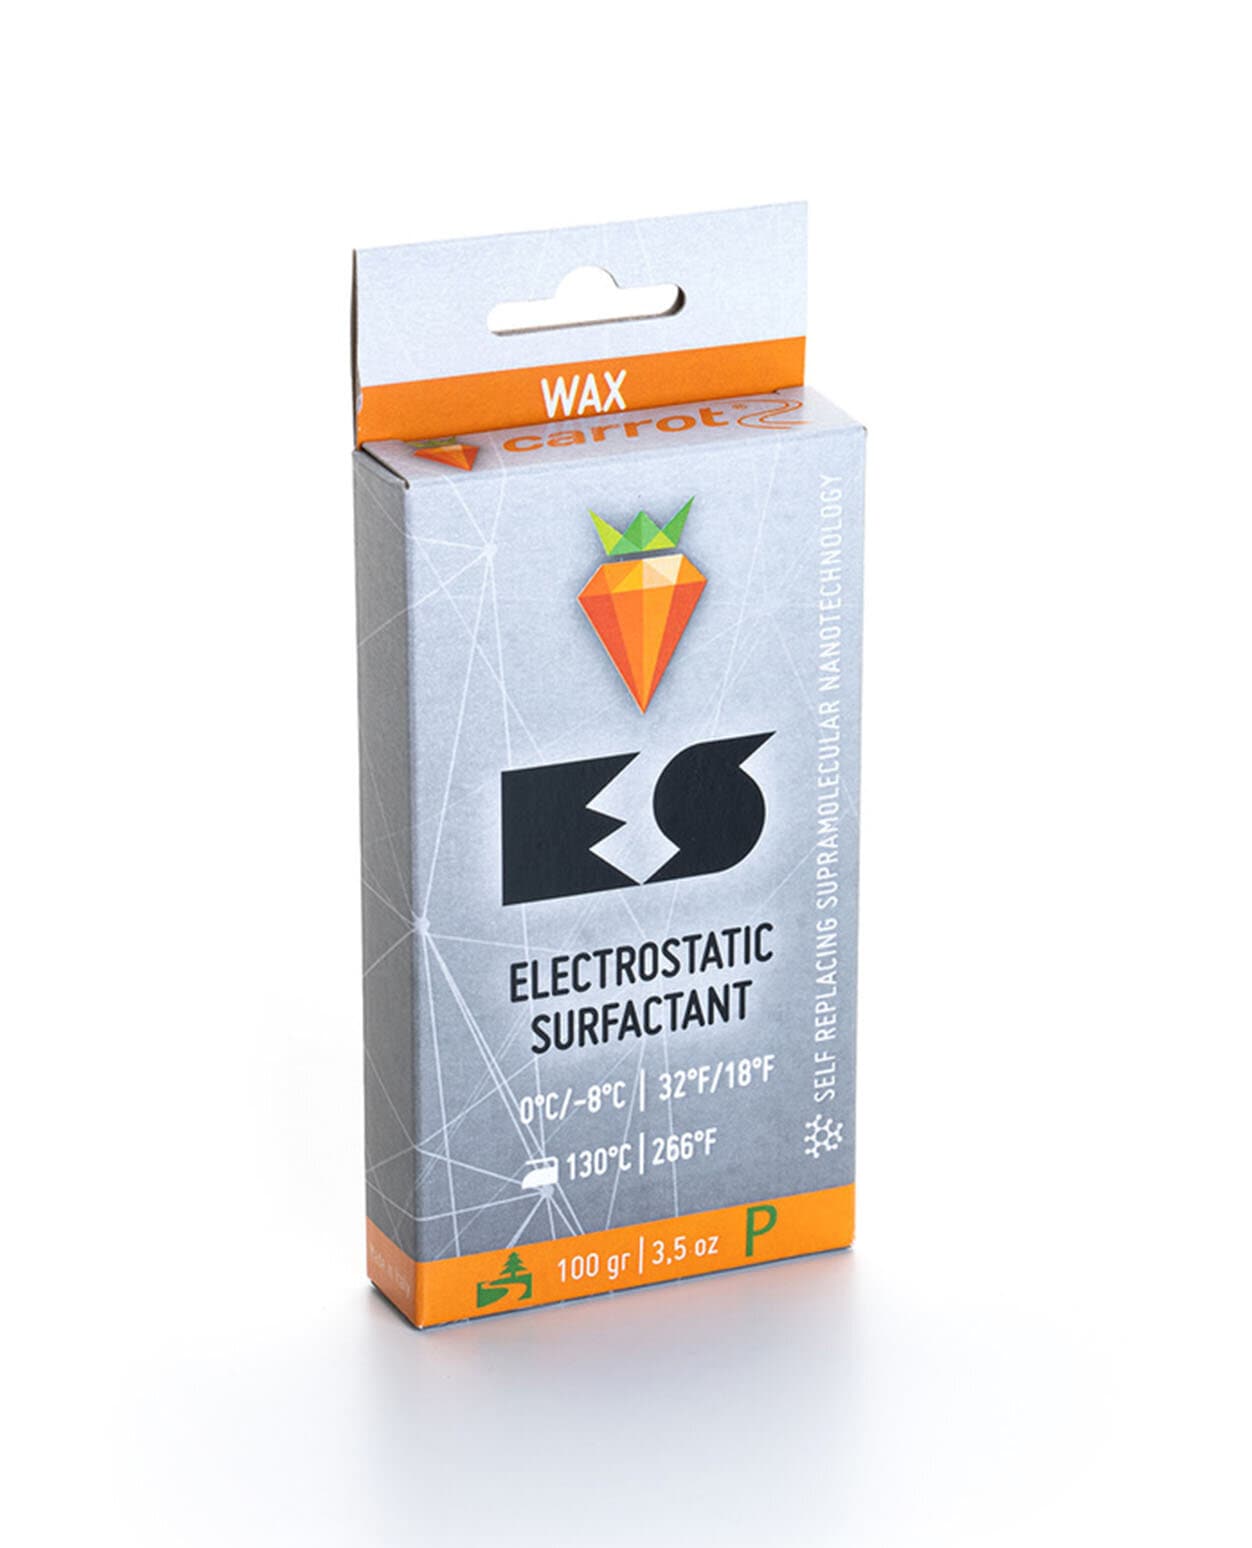 Carrot Electrostatic Surfactant 0°C/-8°C 100g